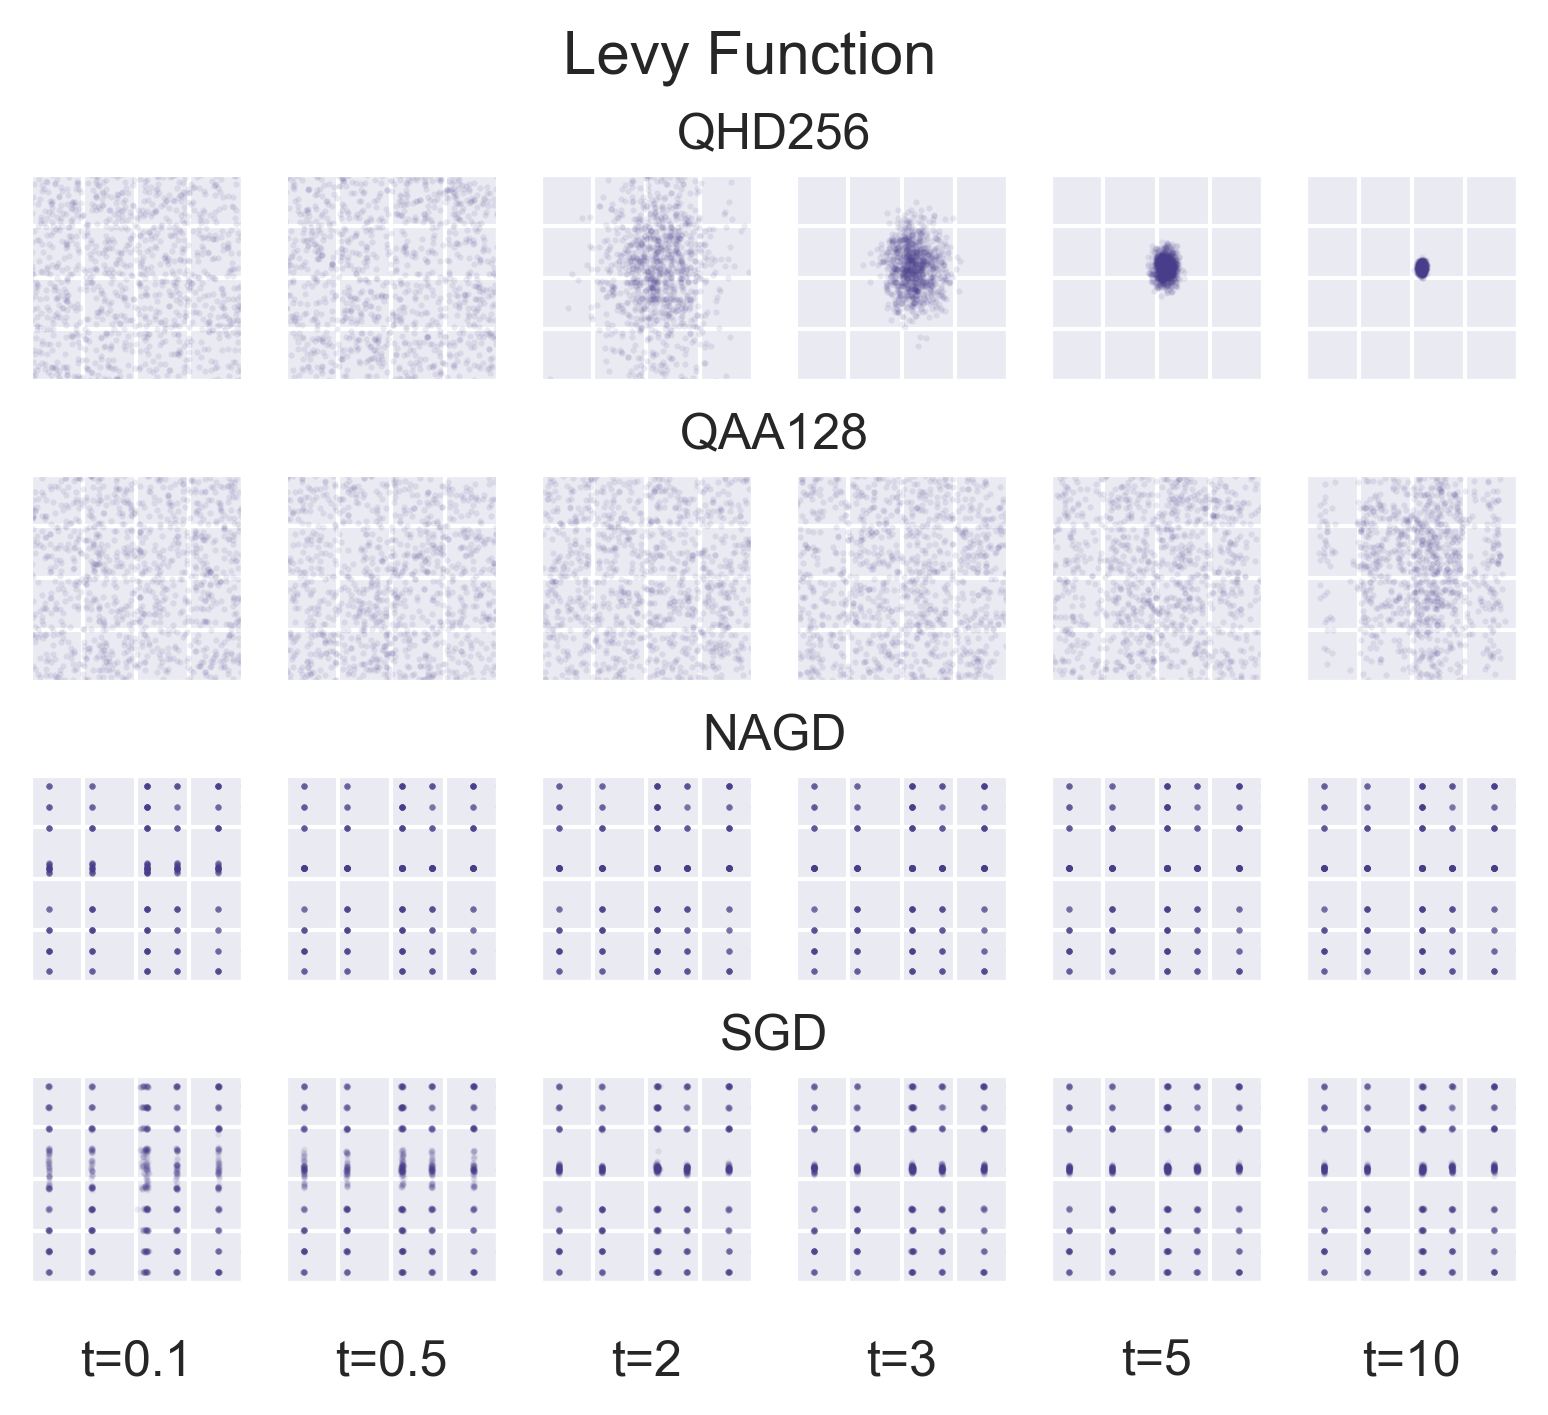 Comparison of optimization methods on levy